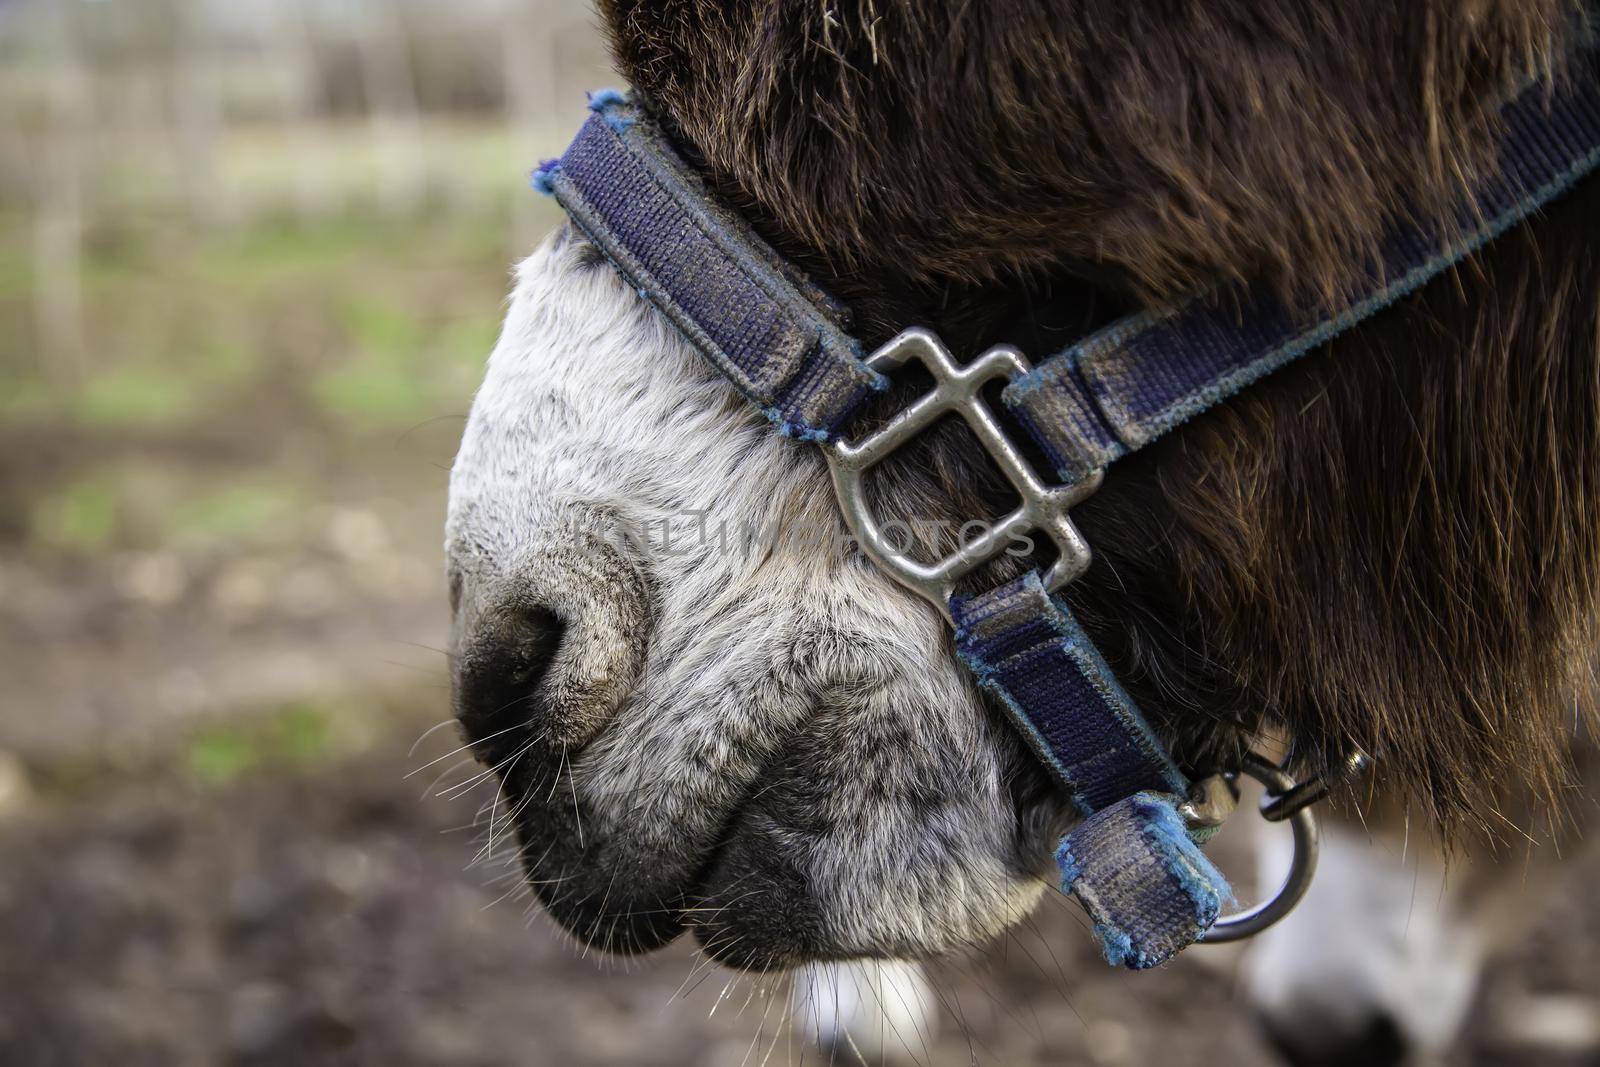 Donkey head on a farm by esebene